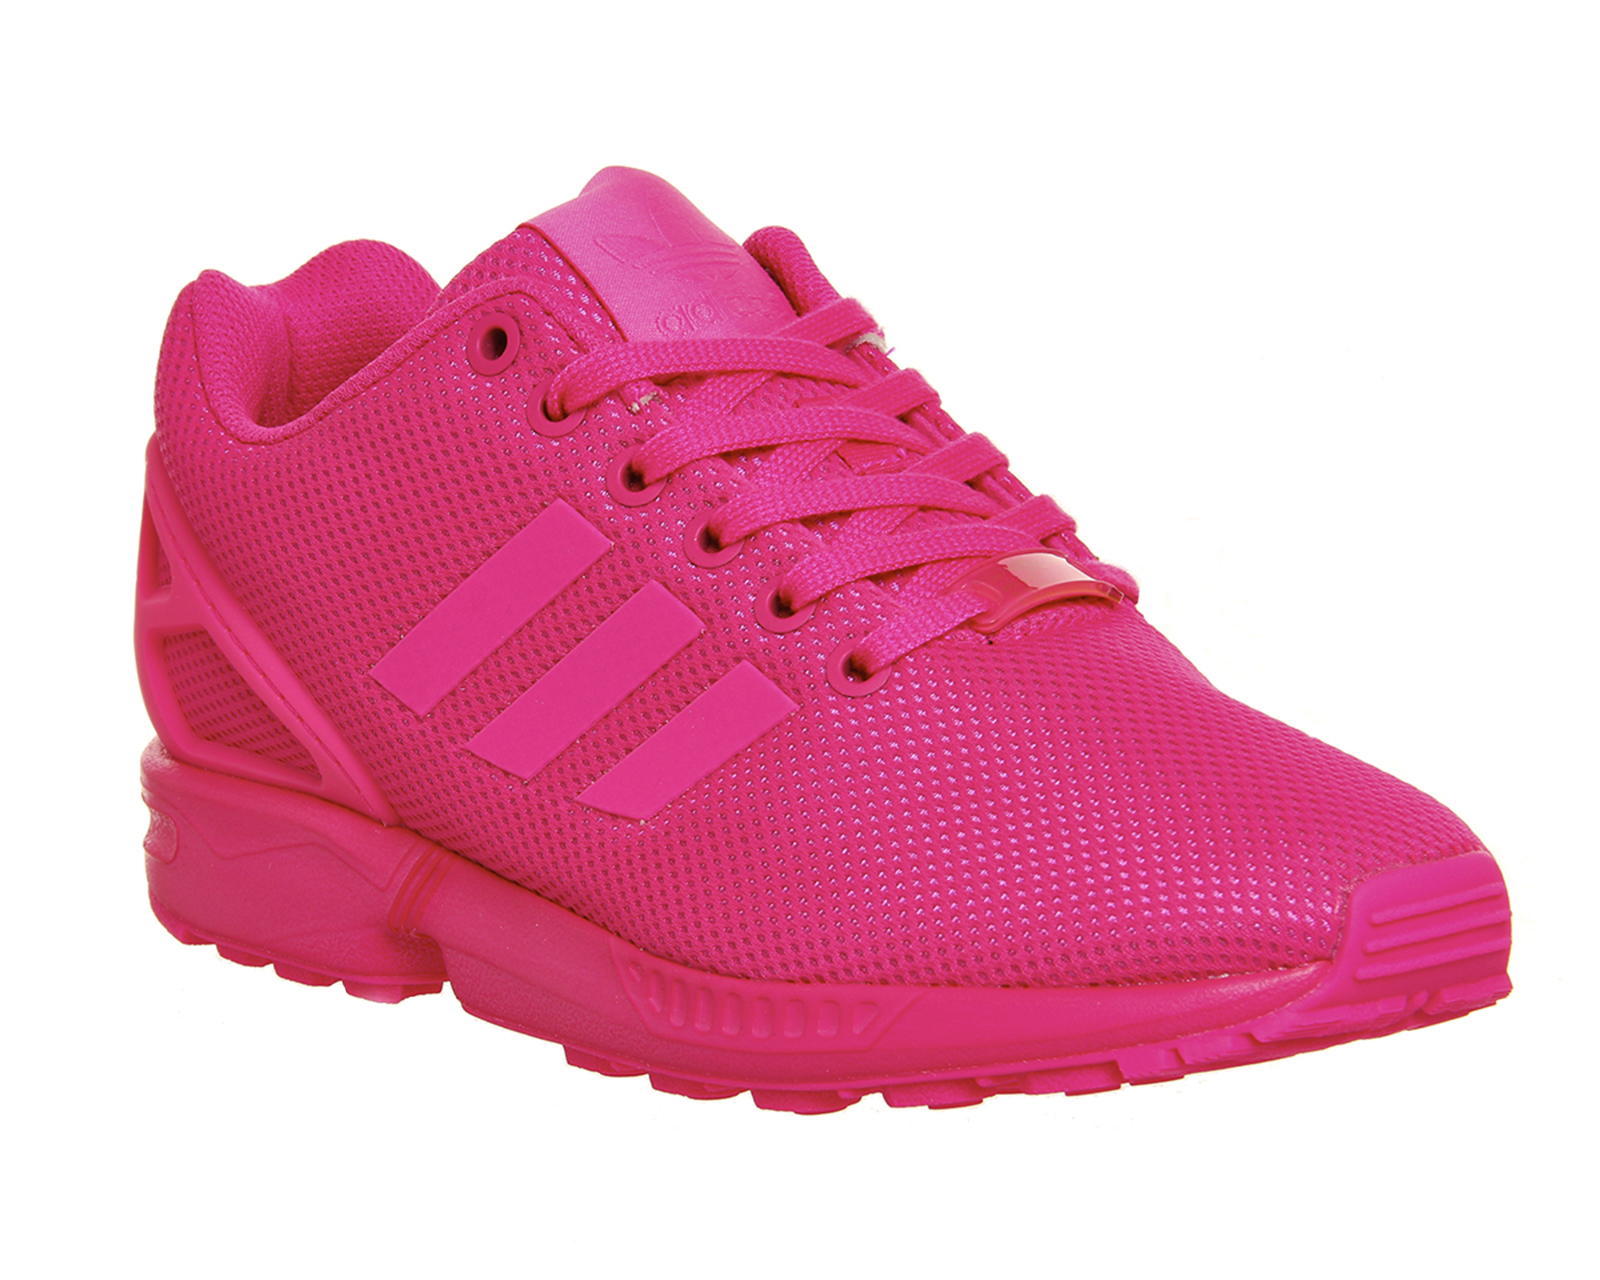 adidas torsion zx flux pink